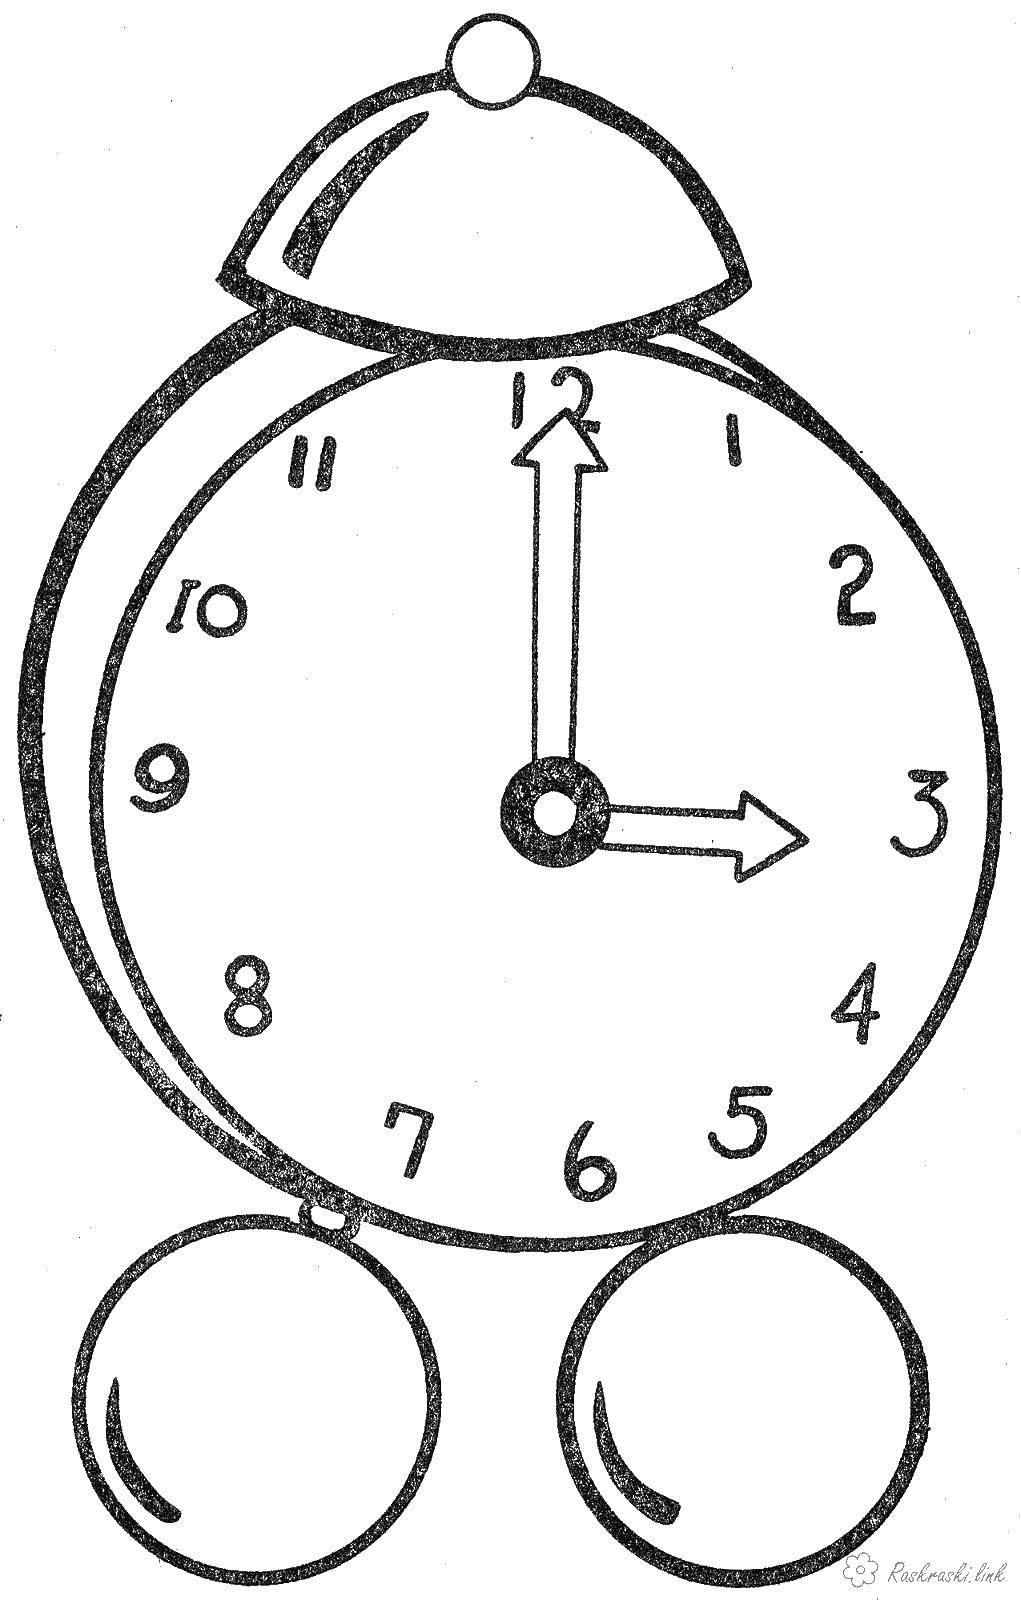 Coloring Alarm clock. Category Watch. Tags:  clock, alarm clock.